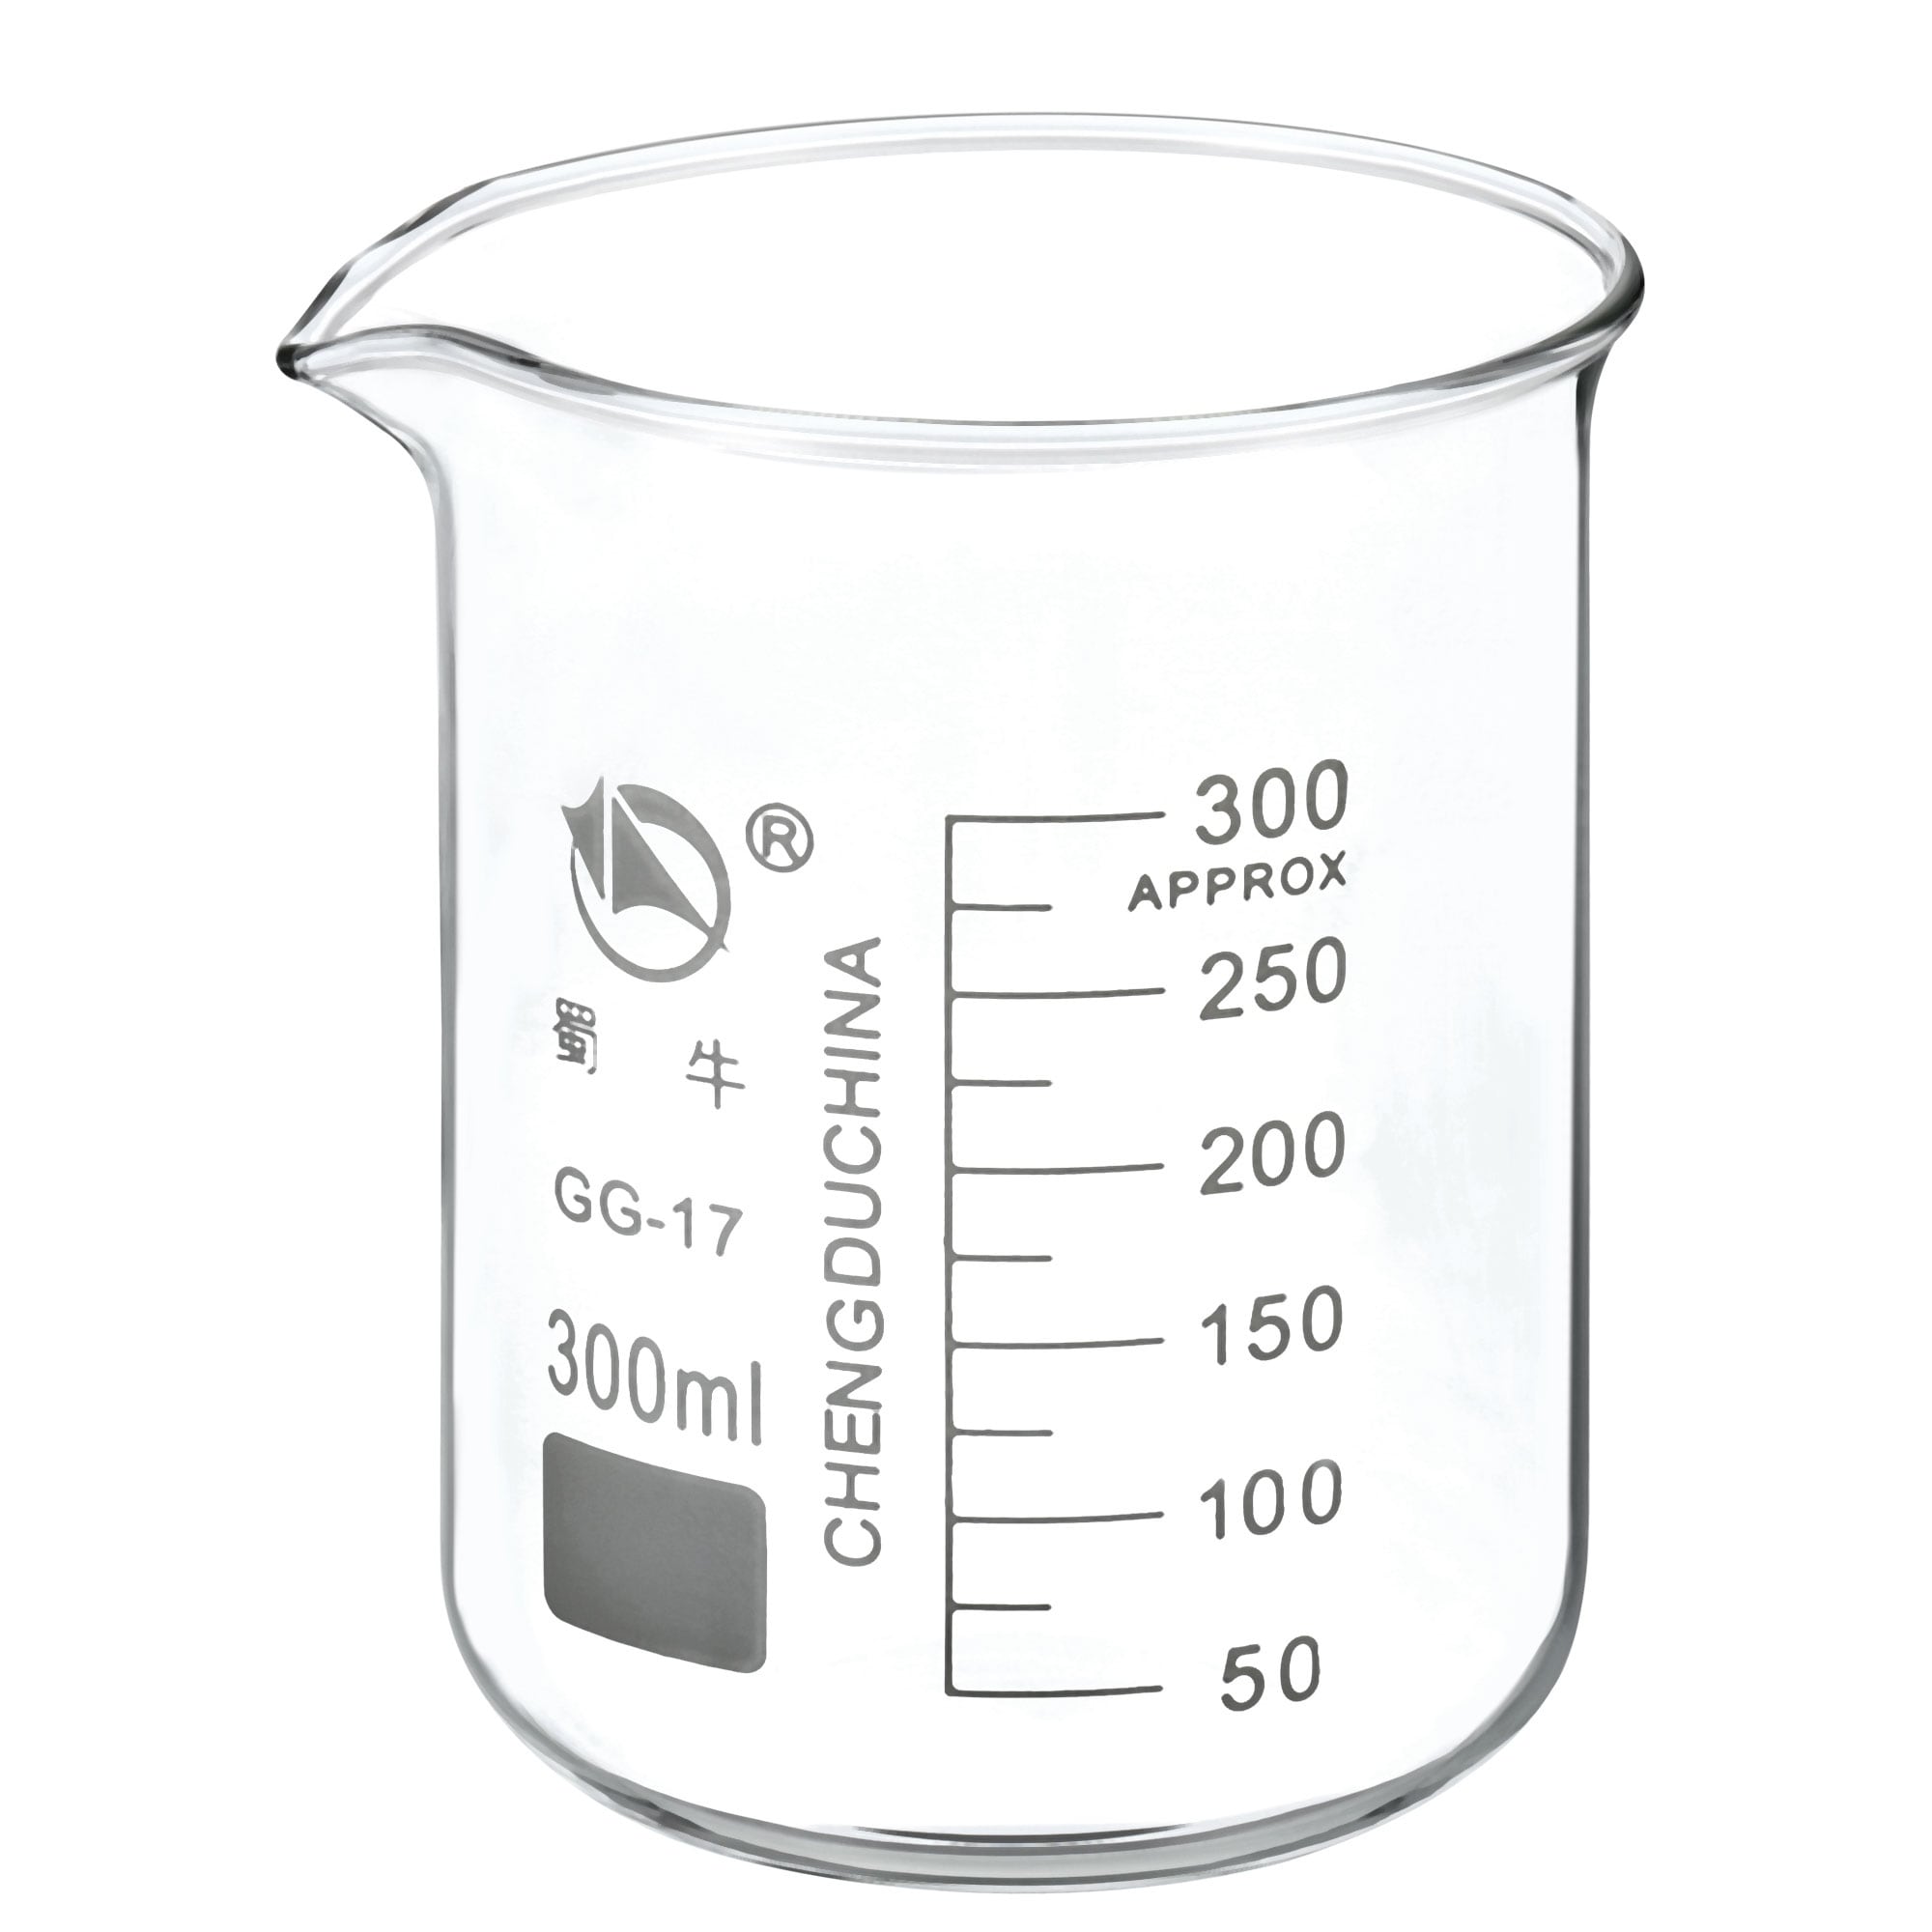 3pcs Graduated Measuring Cup Liquid Measuring Cup Glass Beaker for  Laboratory 